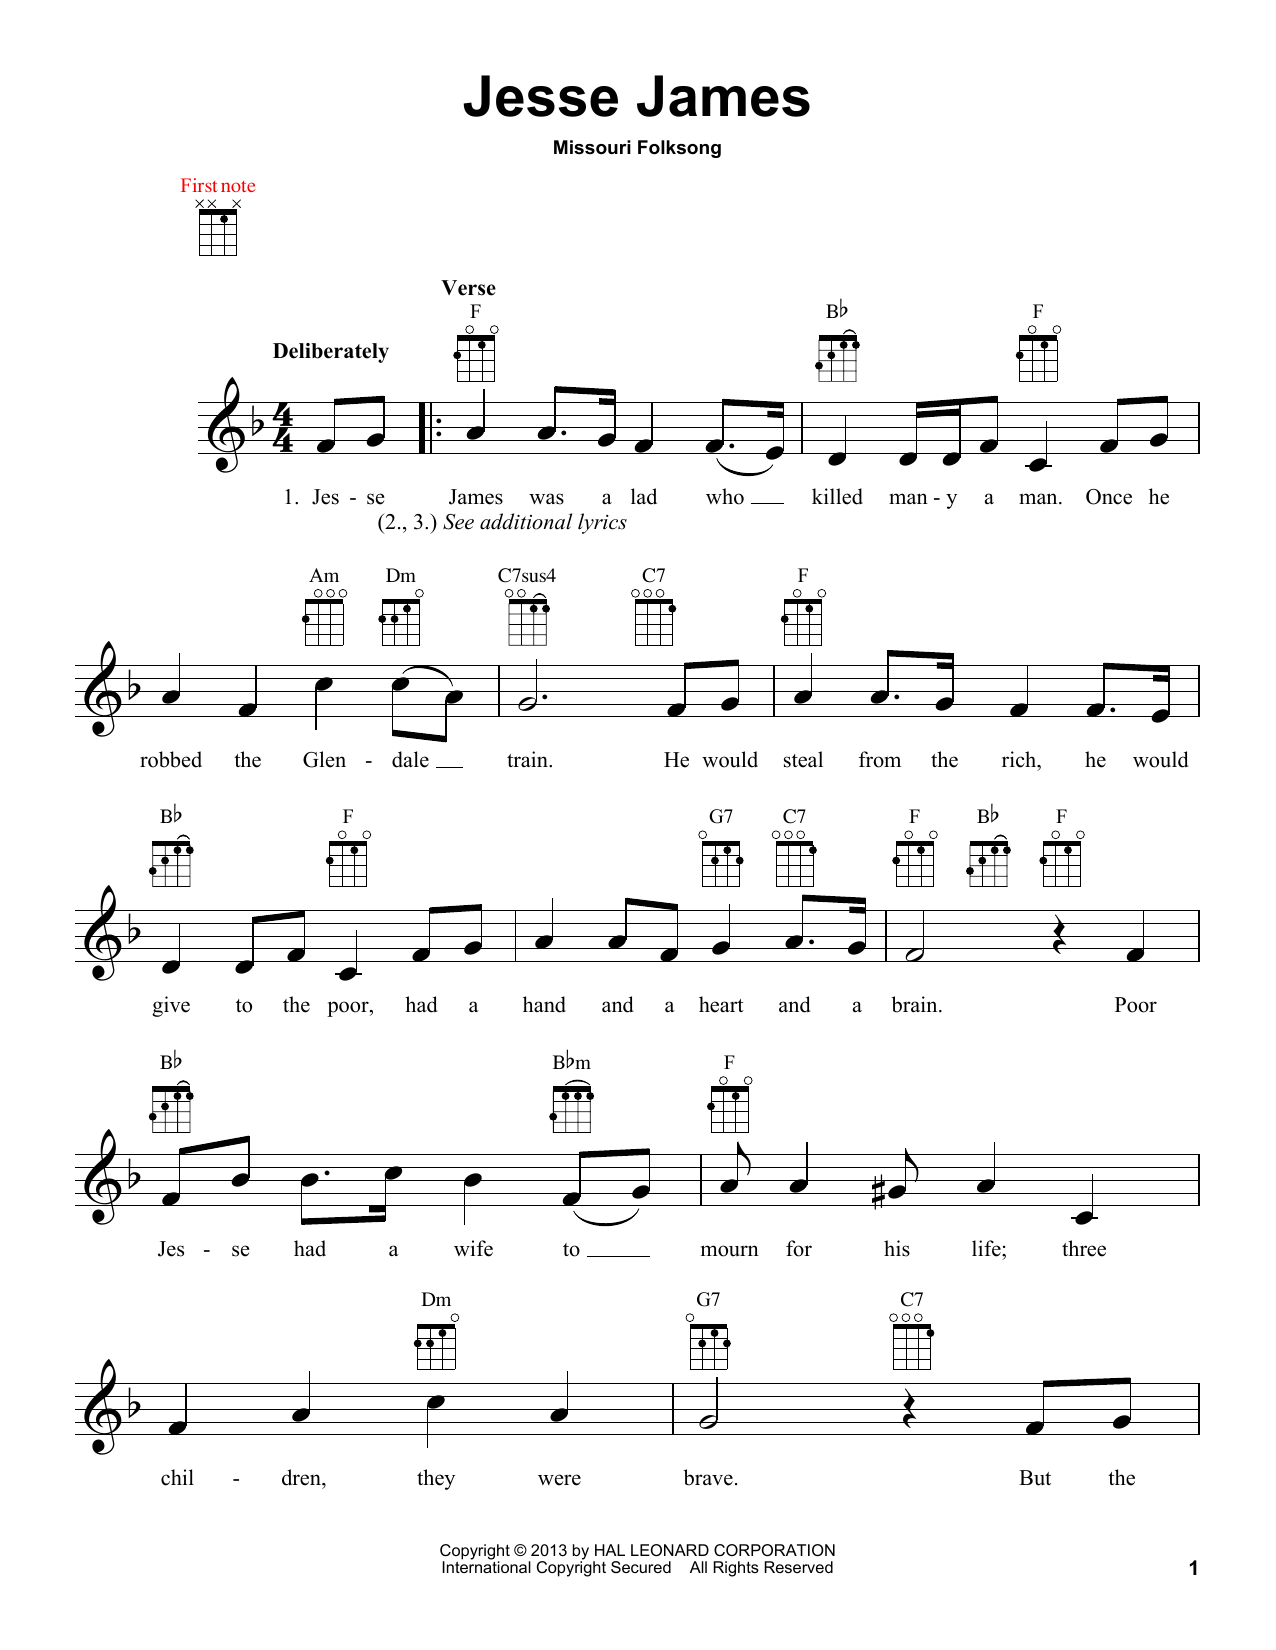 Download Missouri Folksong Jesse James Sheet Music